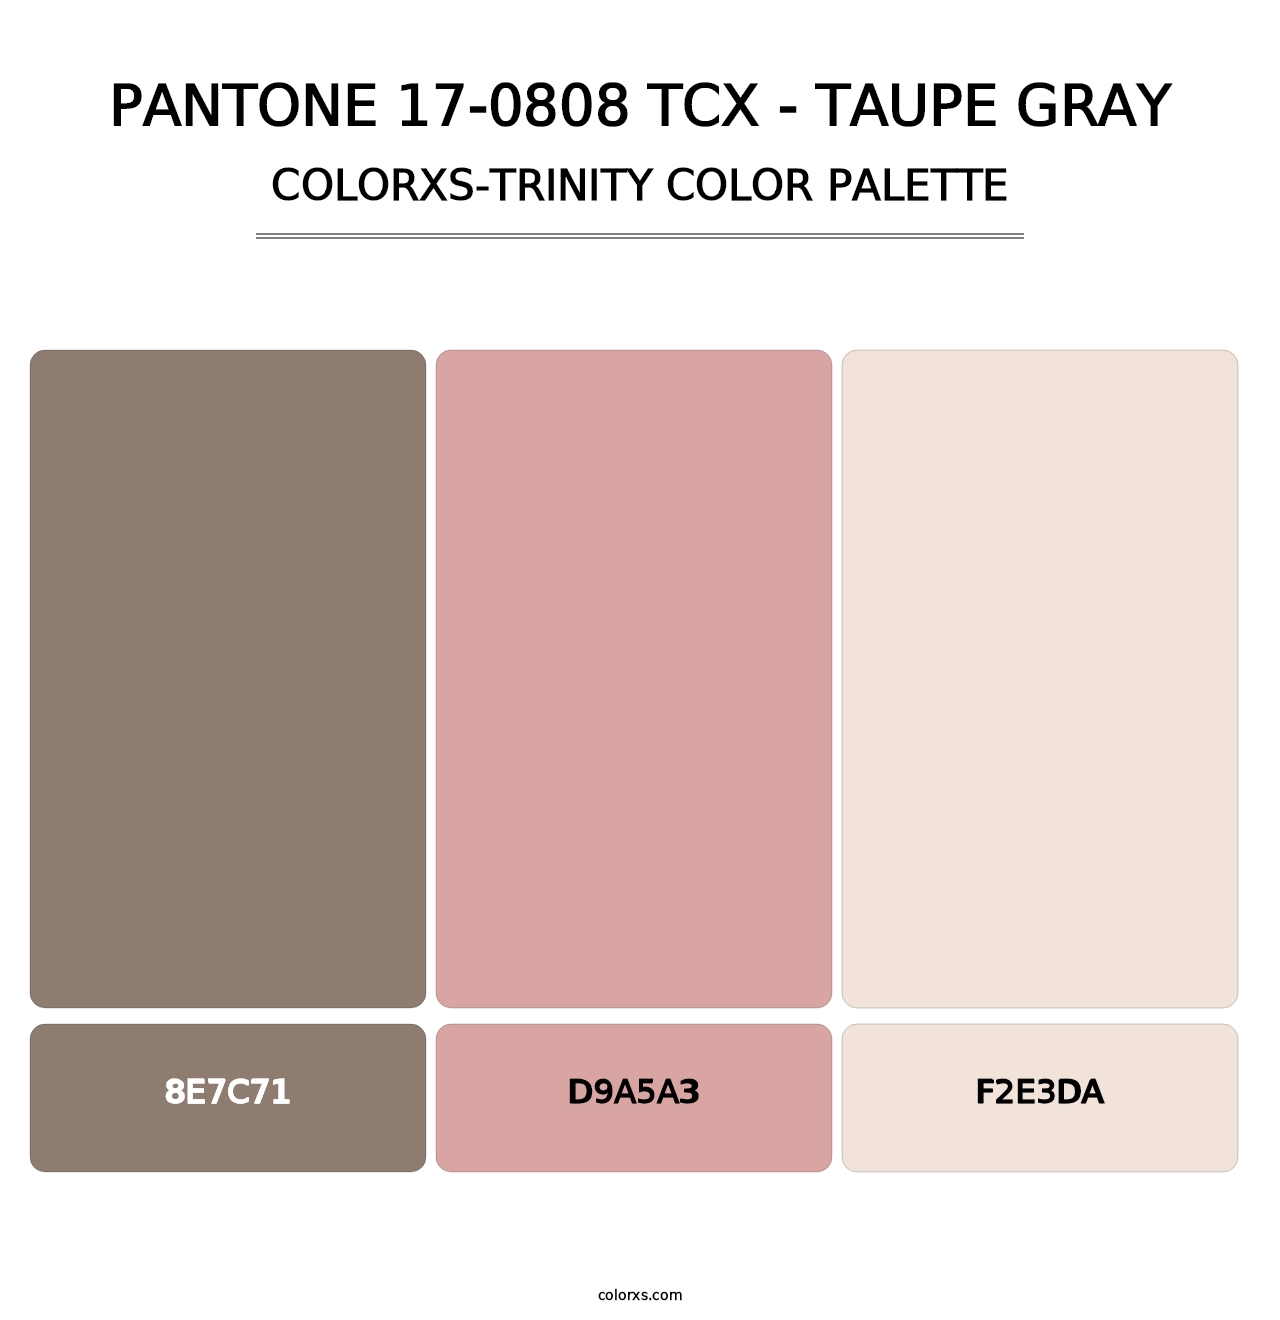 PANTONE 17-0808 TCX - Taupe Gray - Colorxs Trinity Palette